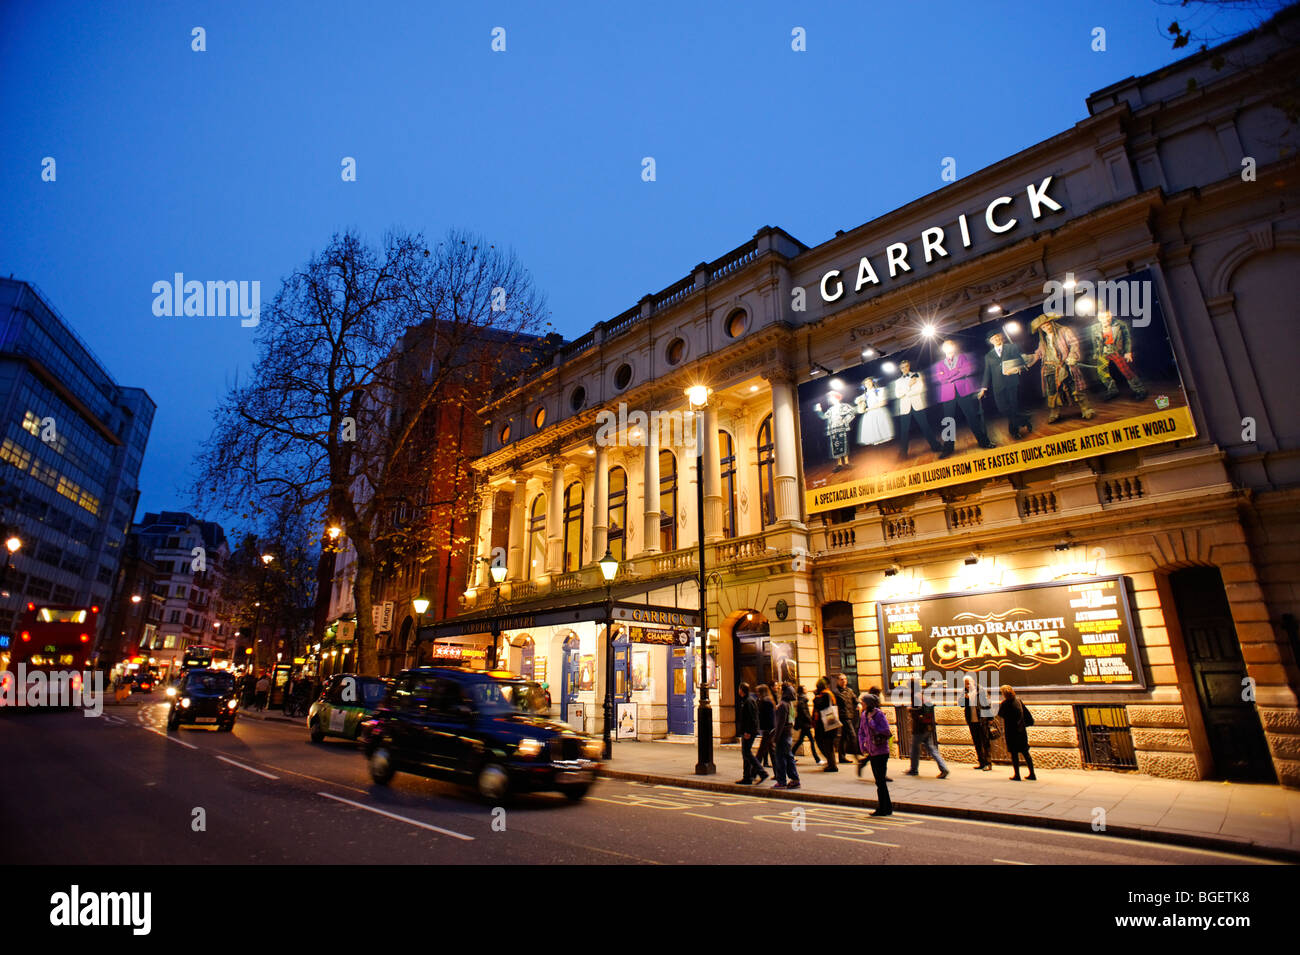 The Garrick theatre. London. UK 2009. Stock Photo